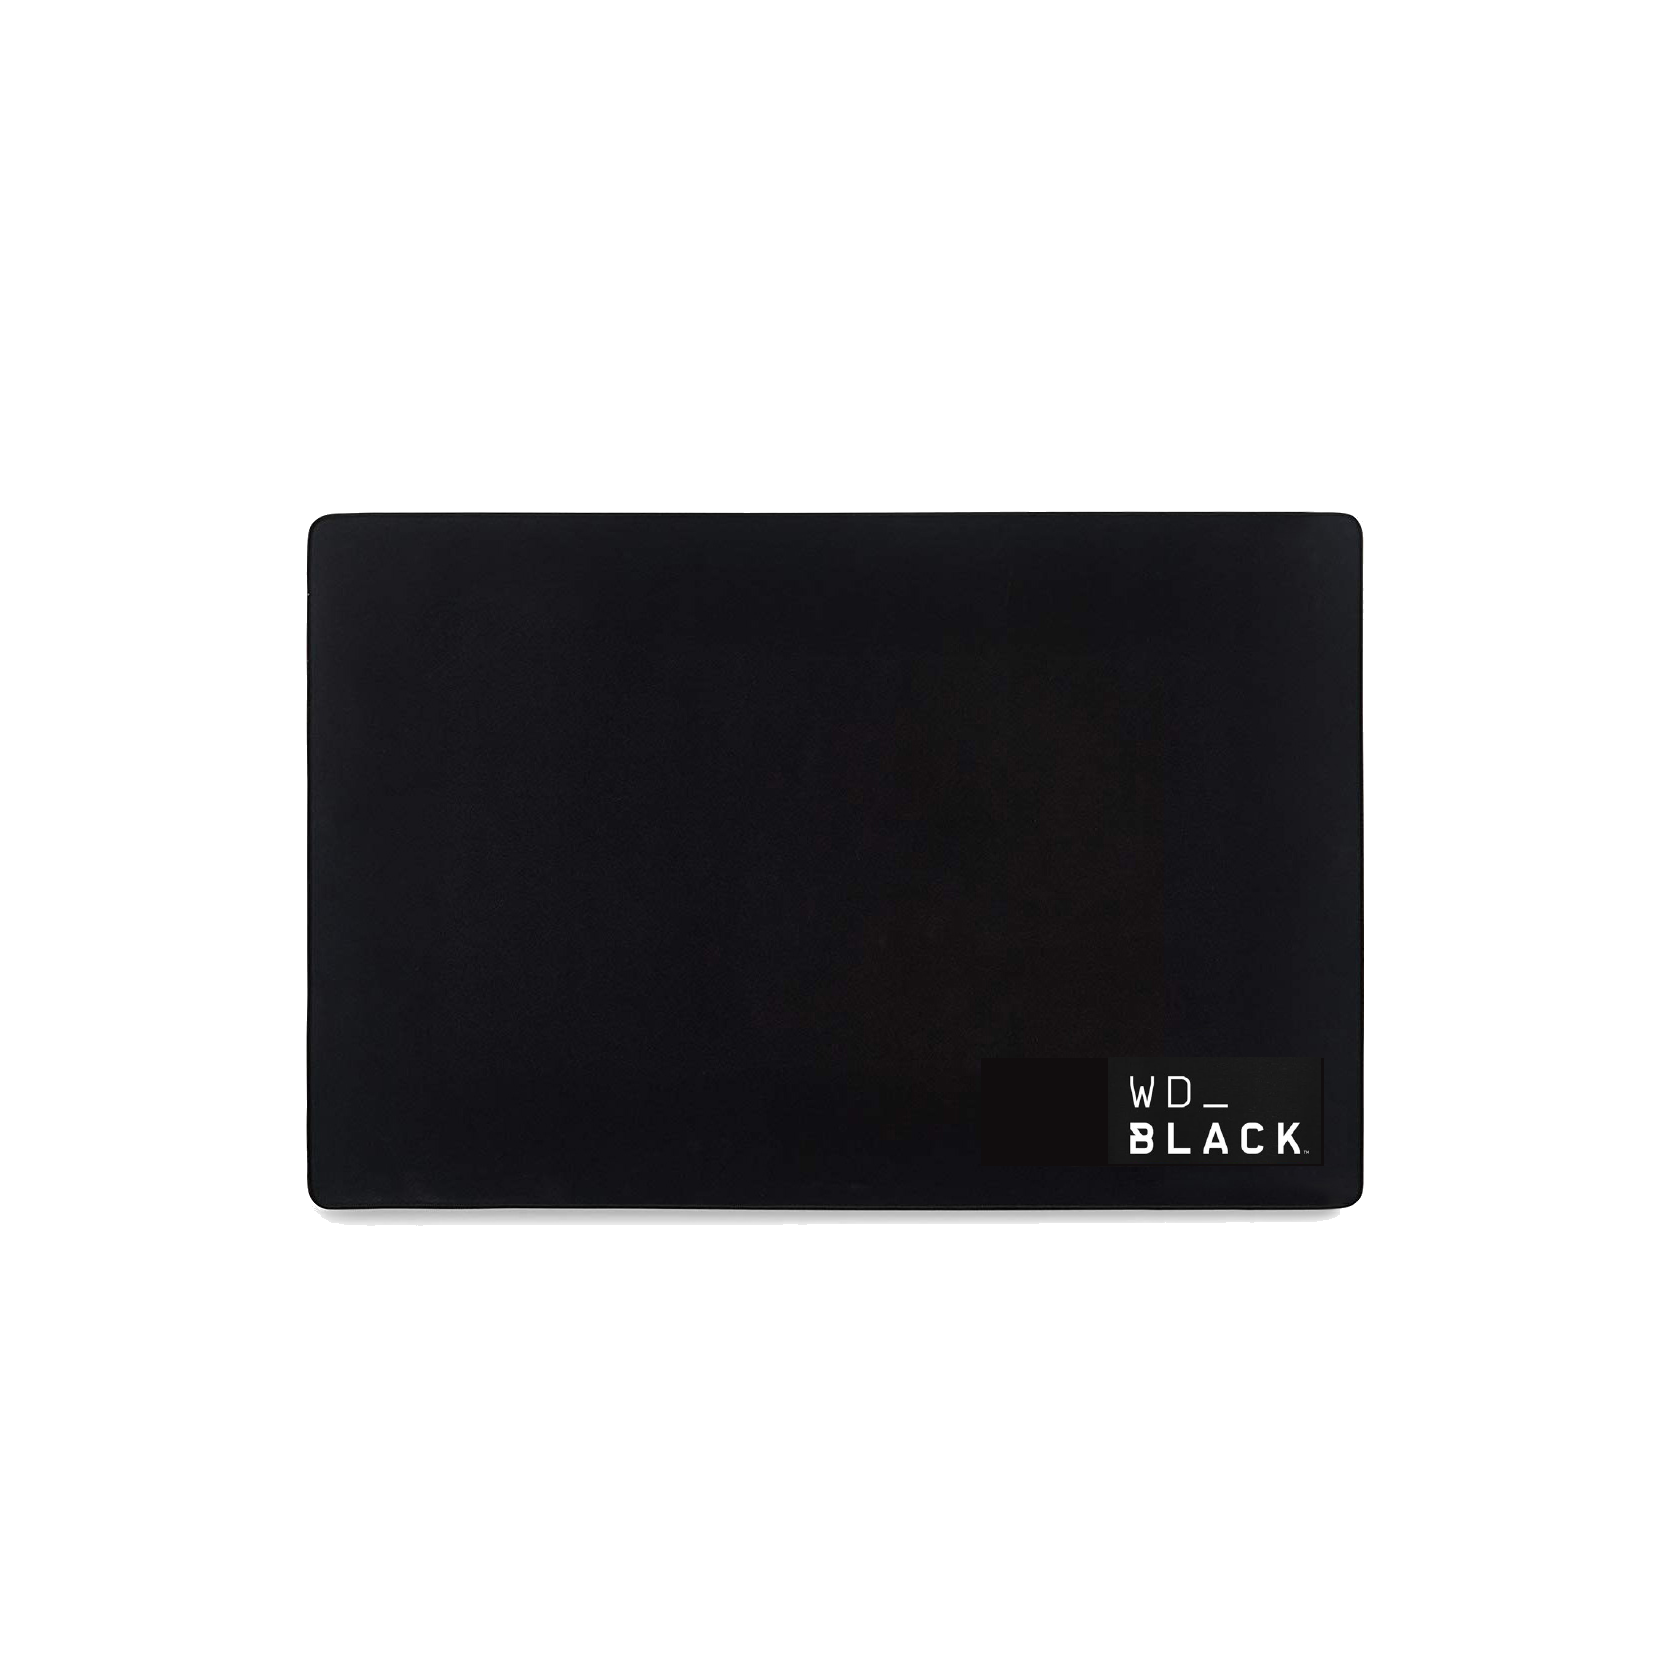 WD_BLACK 457.2mm X 304.8mm X 3.05mm Mousepad - WDMX079RNW